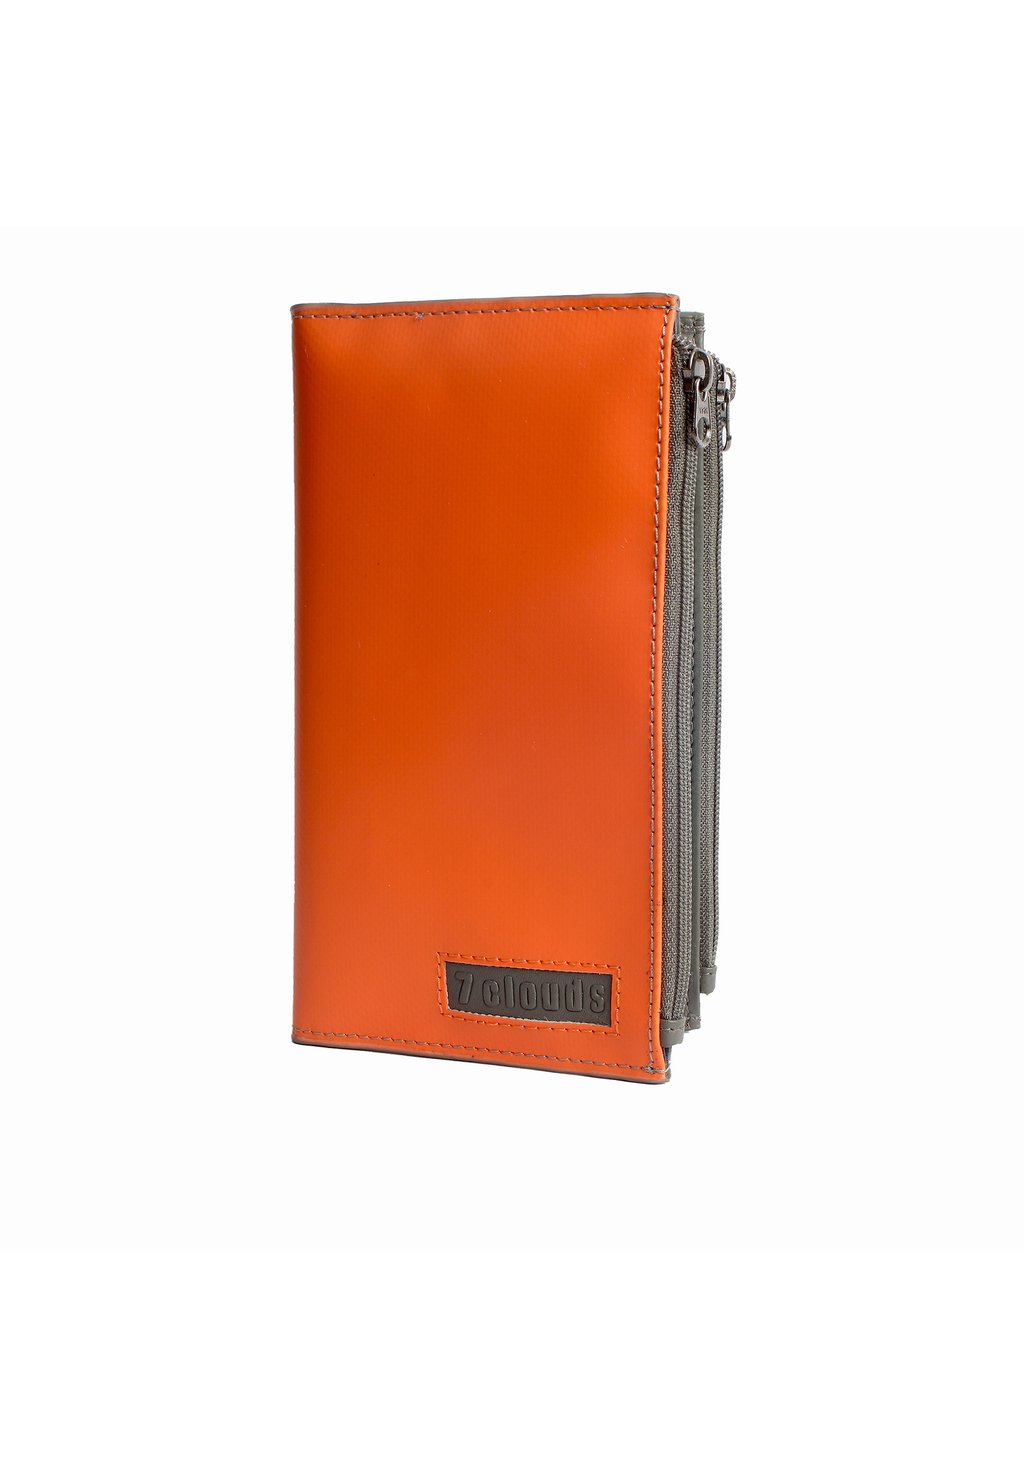 Кошелек RFID-GELD SEGAN 7Clouds, цвет orange